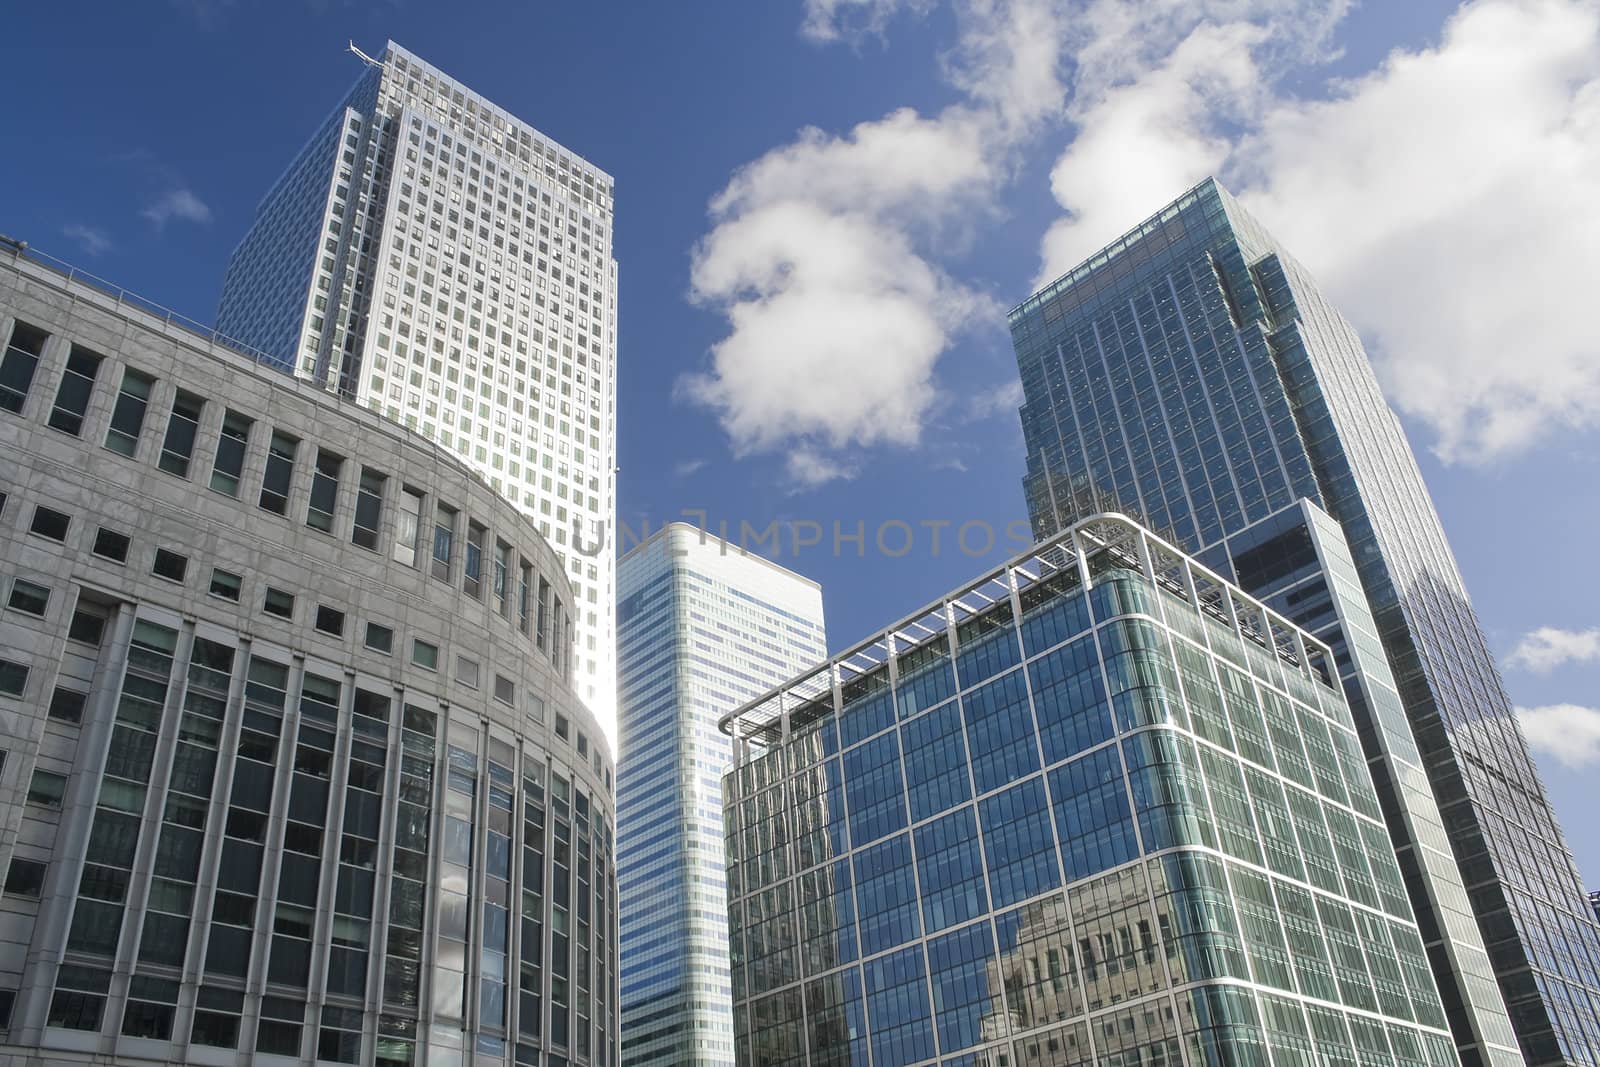 Canary Wharf skyscrapers in London by kmiragaya